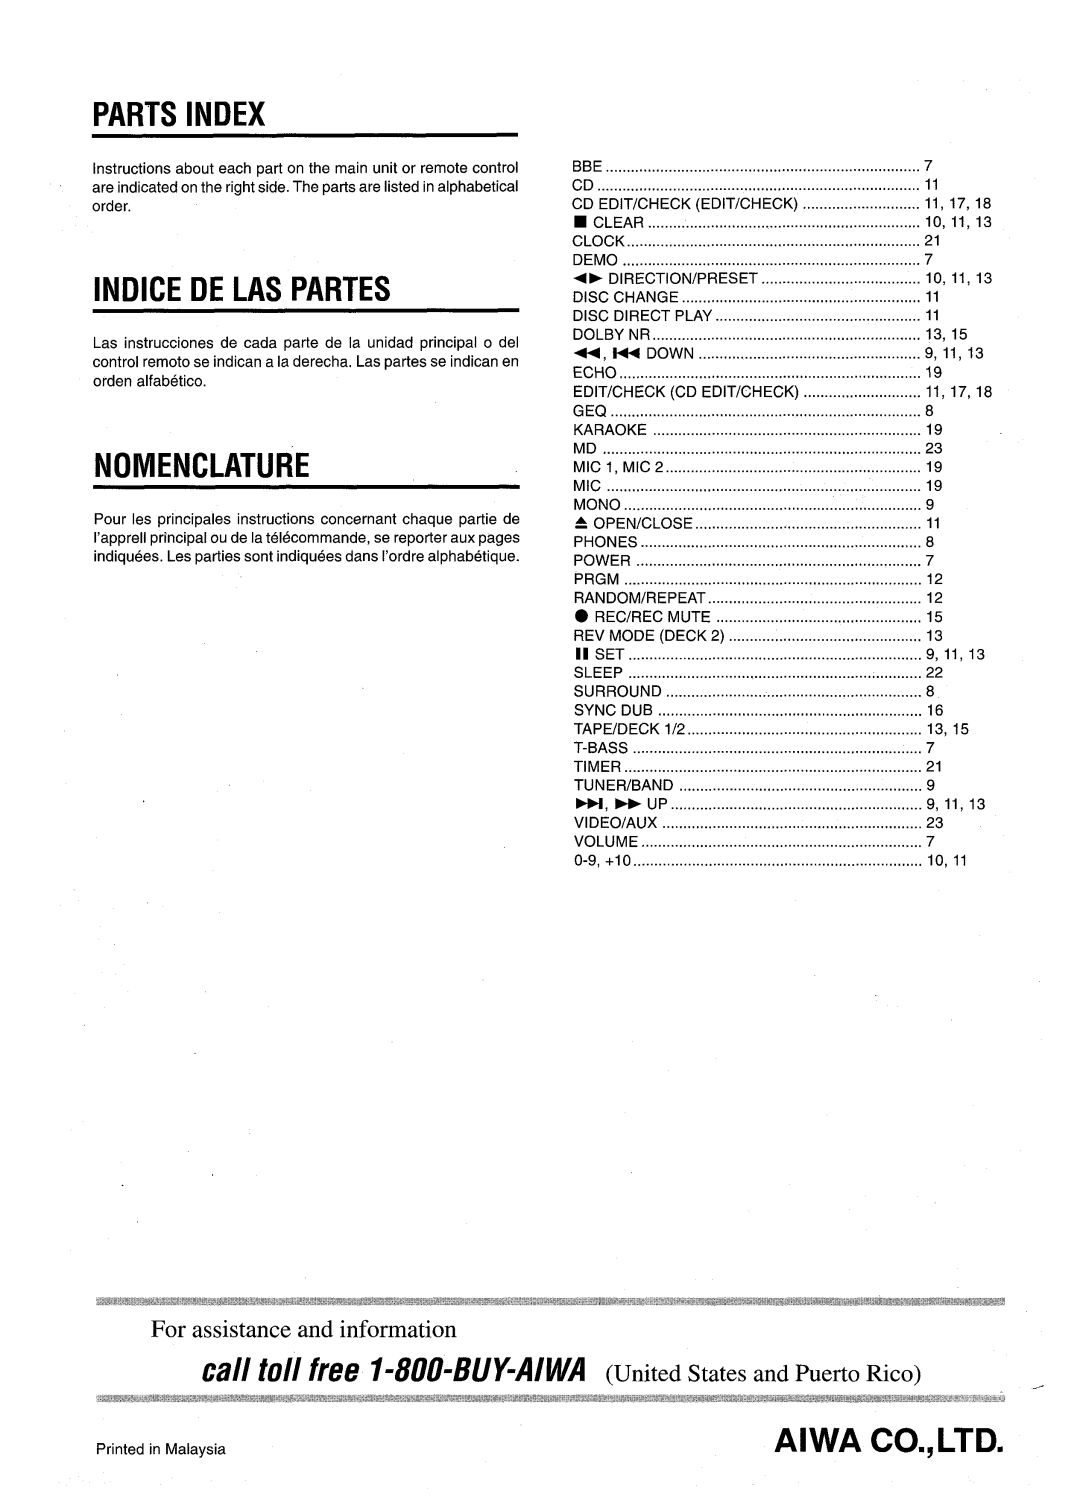 Aiwa CX-NA92 Parts Index, Indice De Las Partes, Nomenclature, Cil// ~7//fh??7-80&6uy-A/wA United States and Puerto Rico 